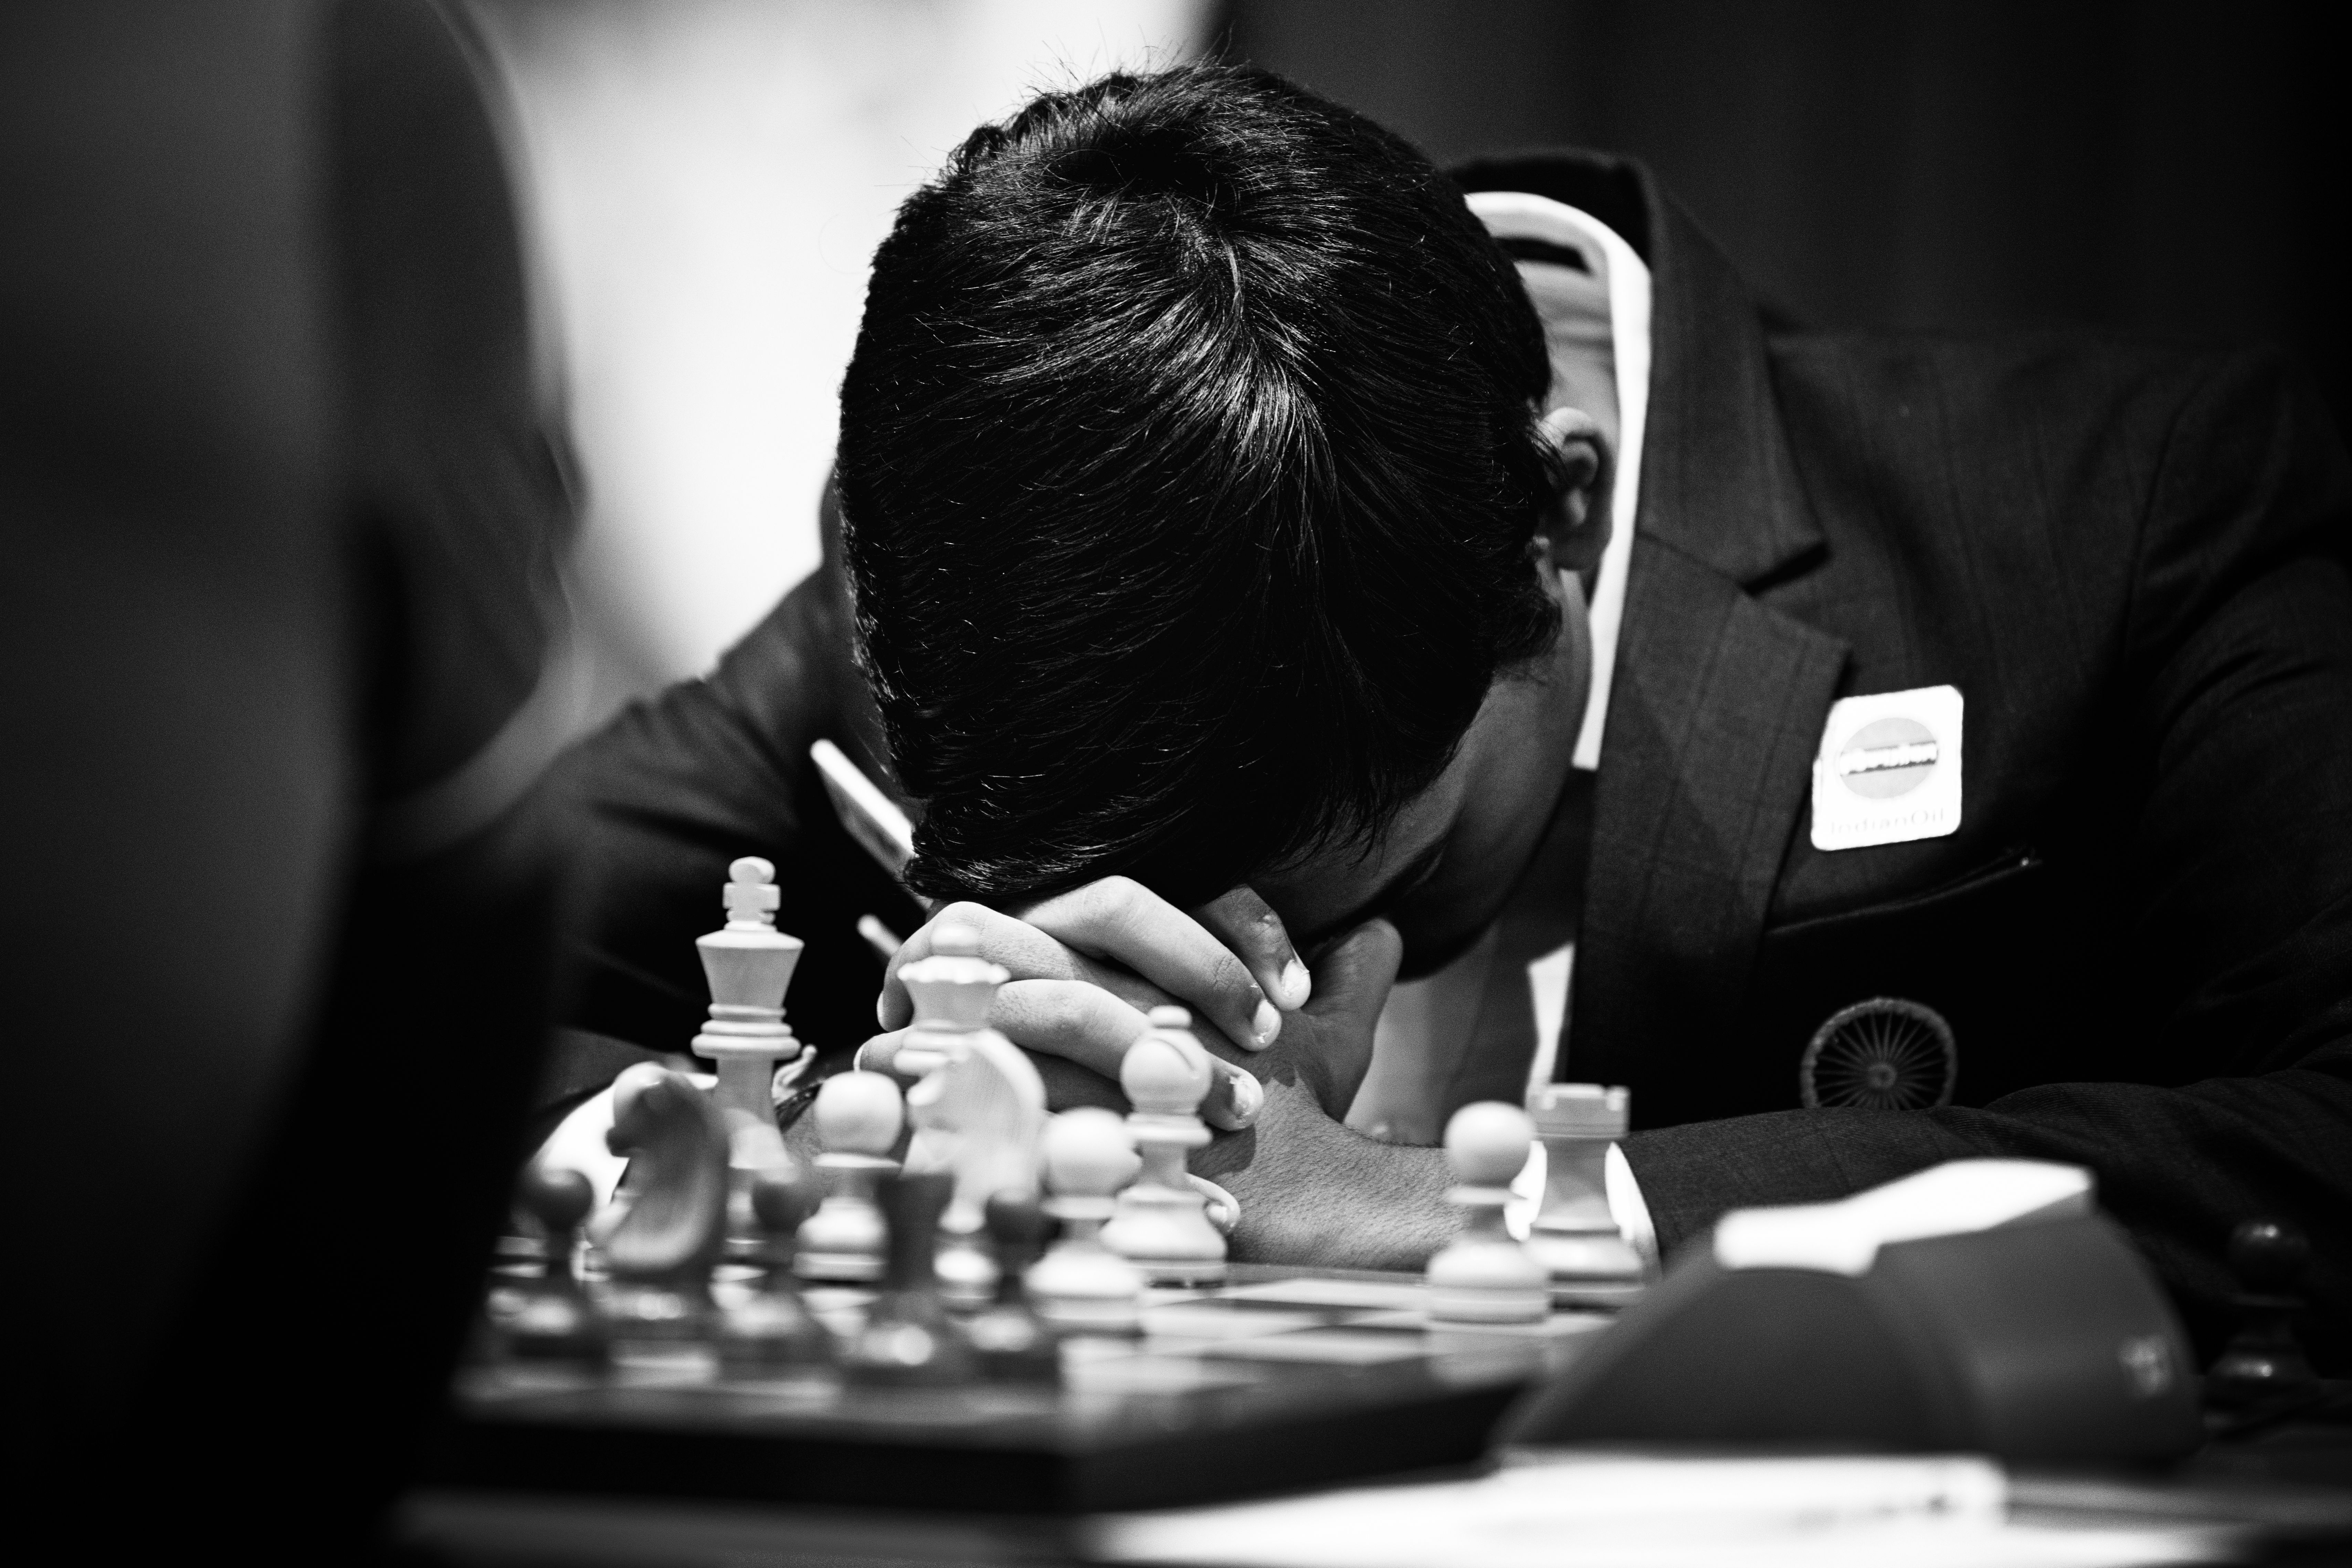 R Praggnanandhaa vs Magnus Carlsen, Chess World Cup final highlights: Pragg  finishes runner-up after Carlsen wins final